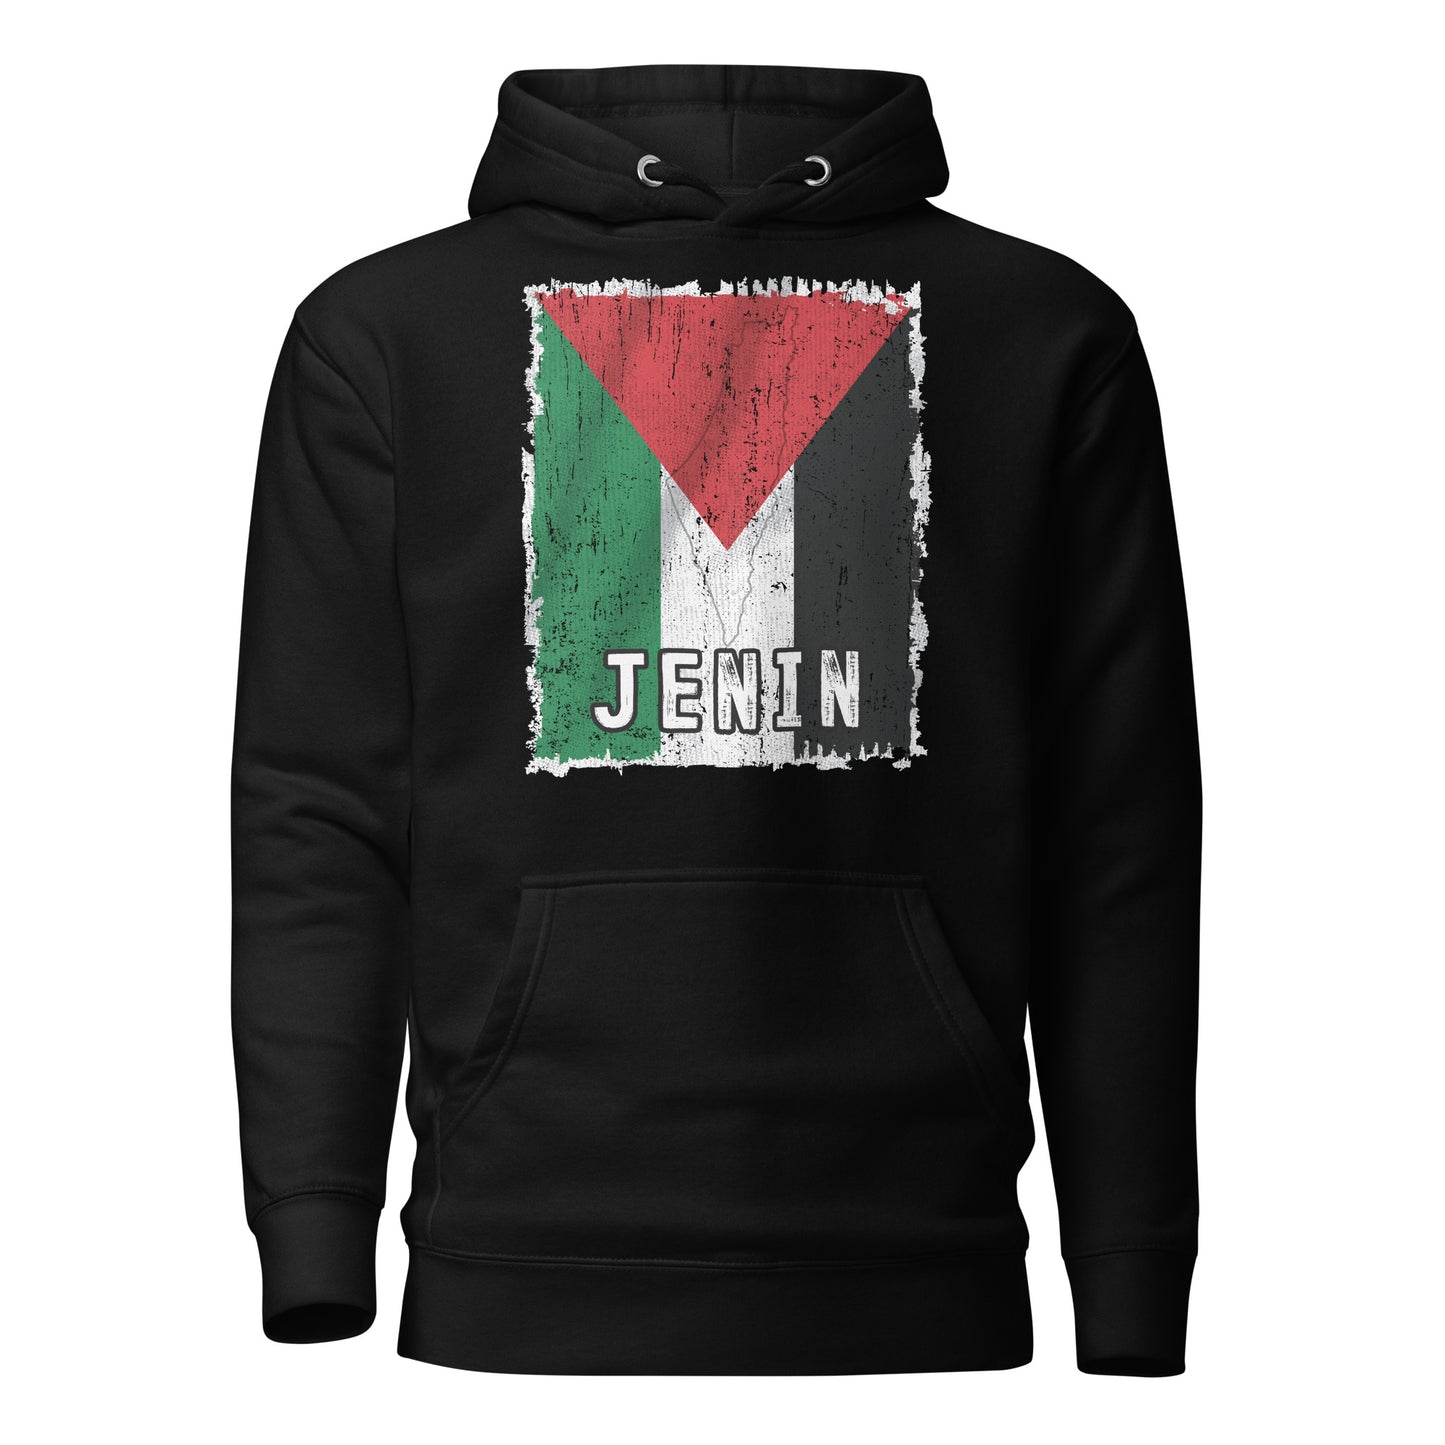 Palestine Flag & City - Jenin Unisex Hoodie